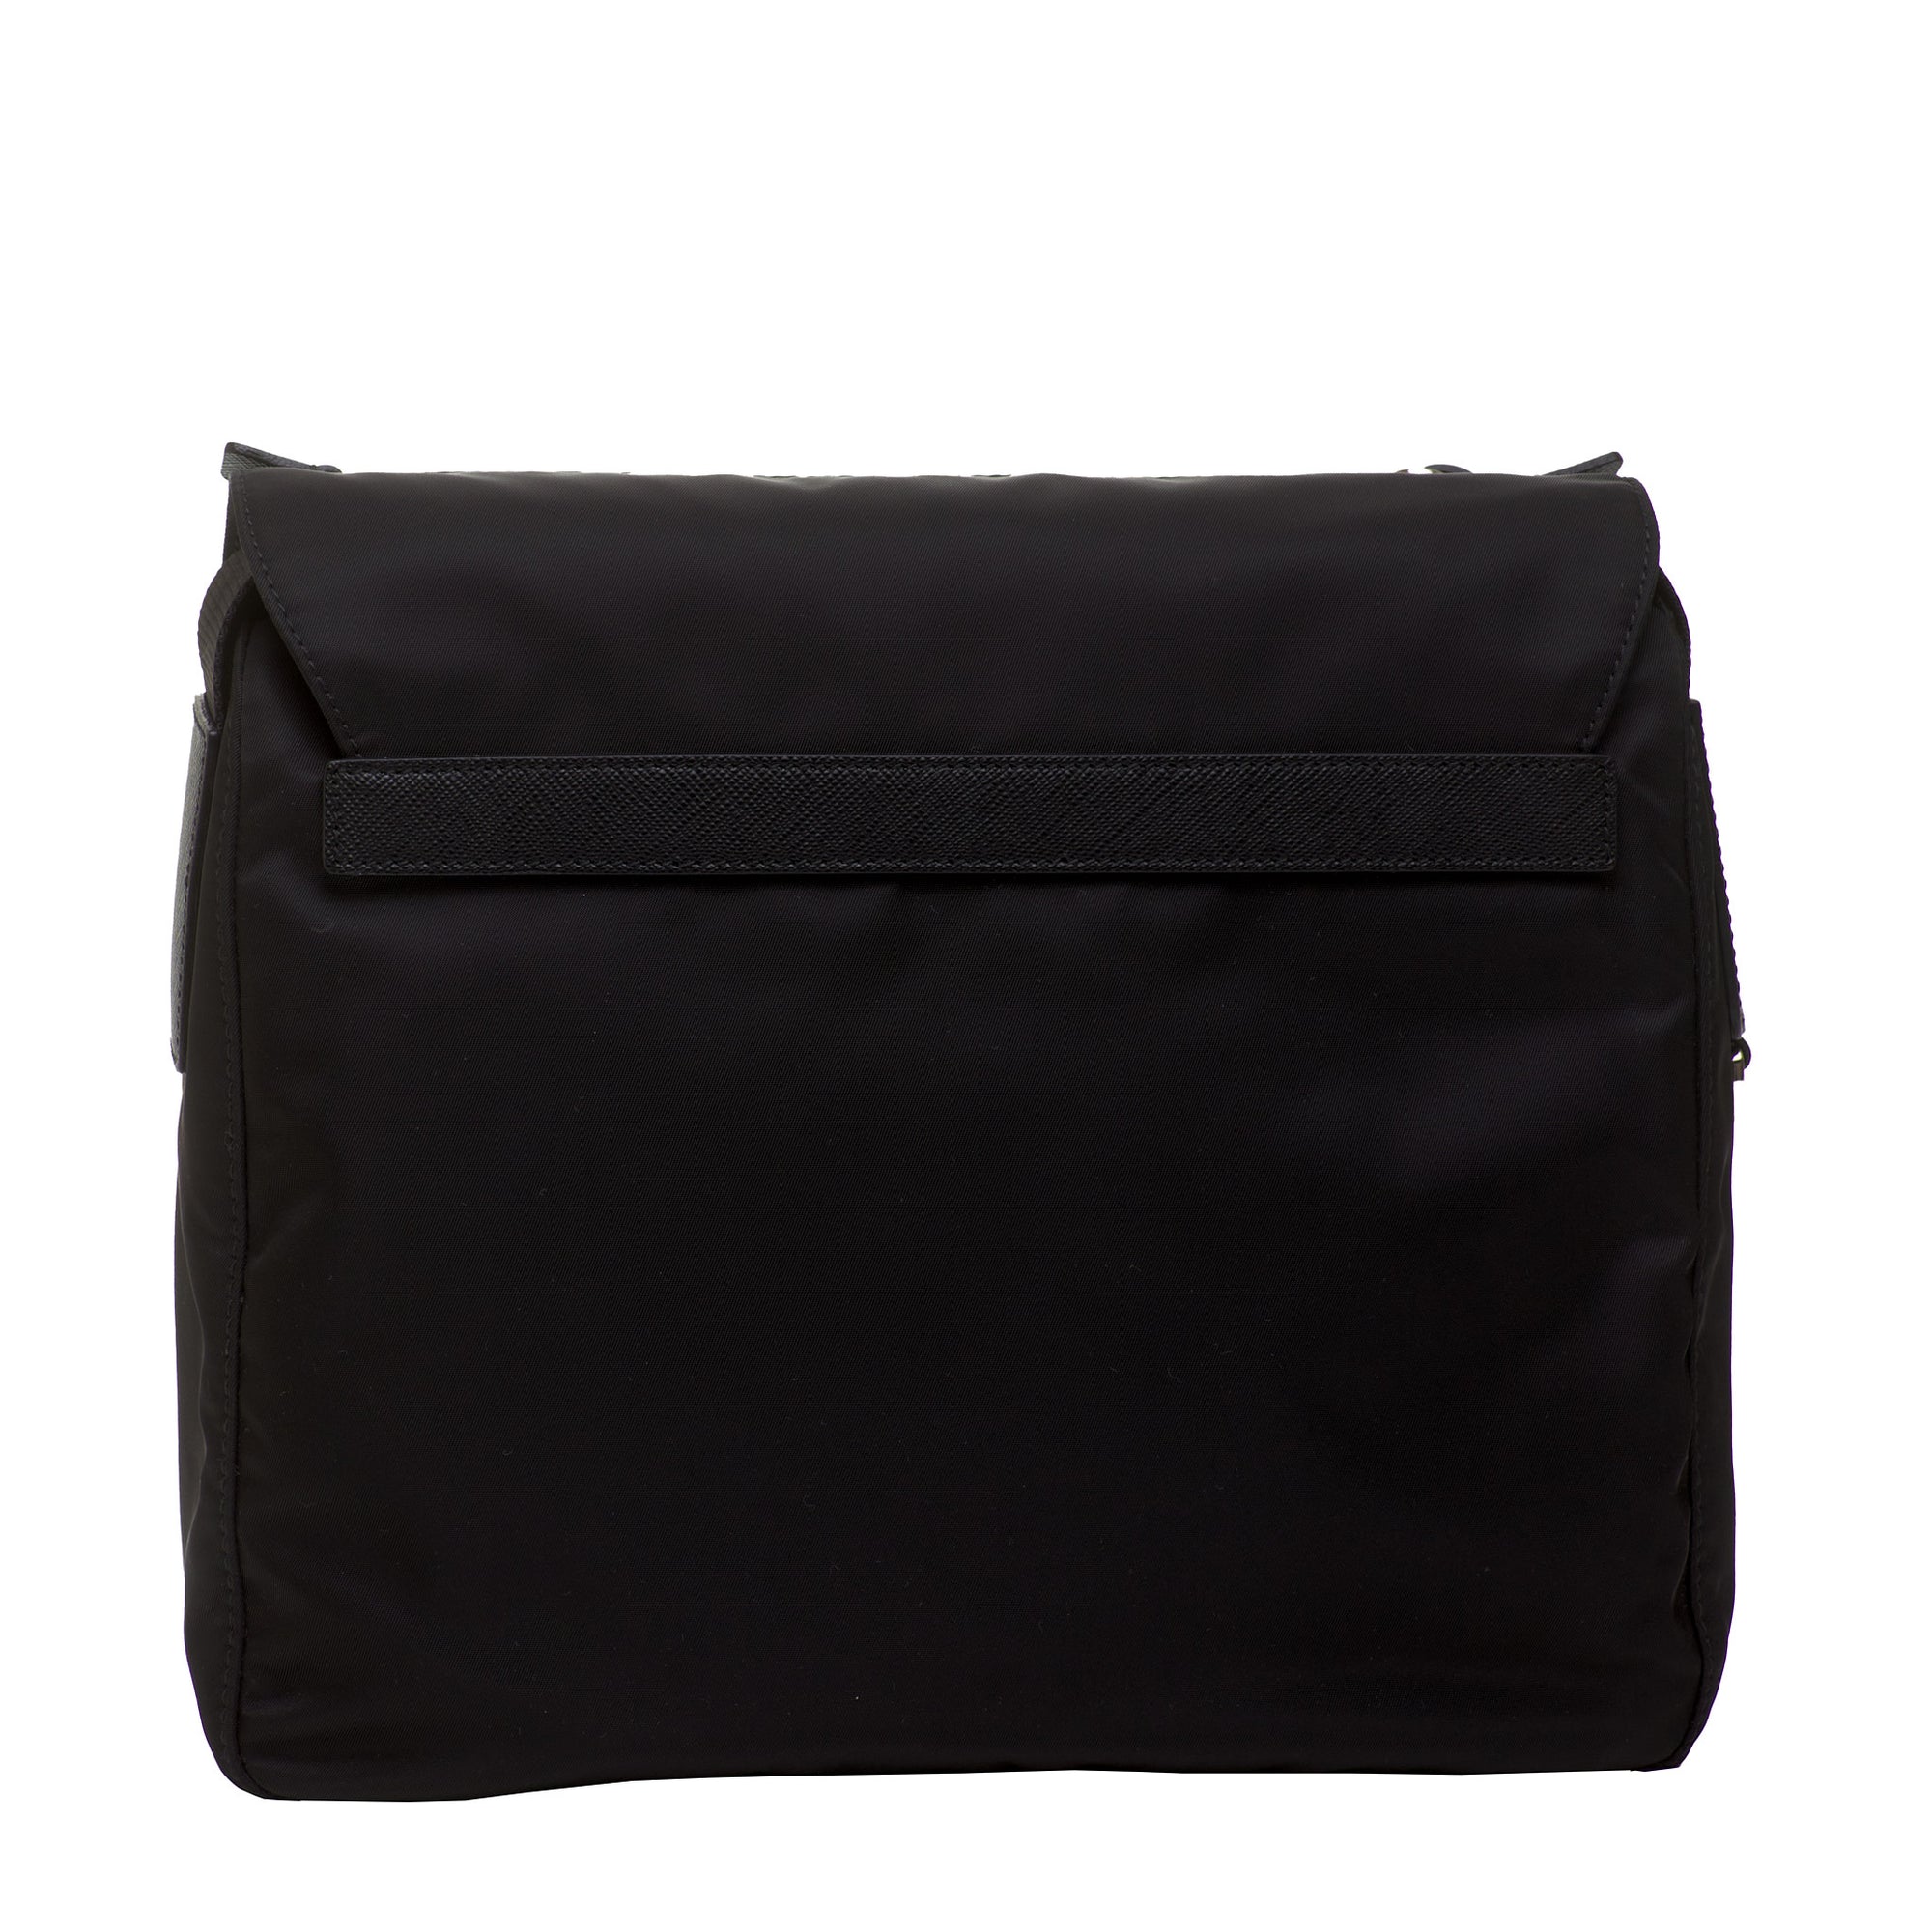 Prada's Arqué Leather Shoulder Bag Is Reaching Cult Status